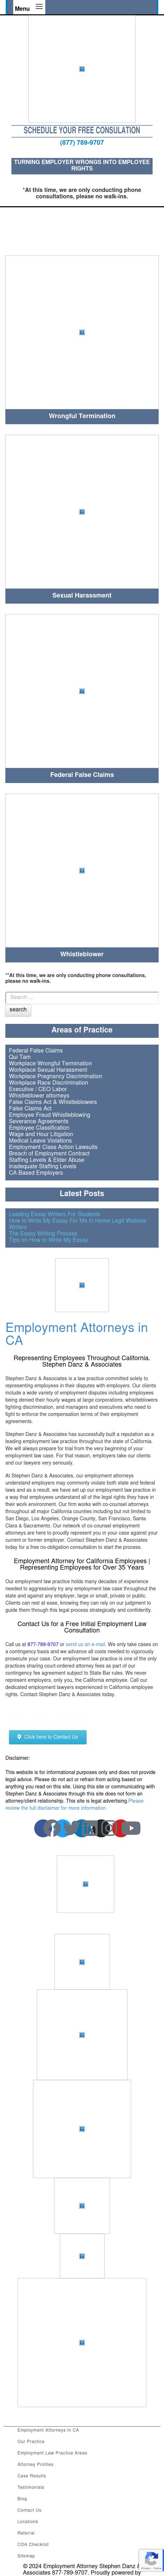 Stephen Danz & Associates - Los Angeles CA Lawyers